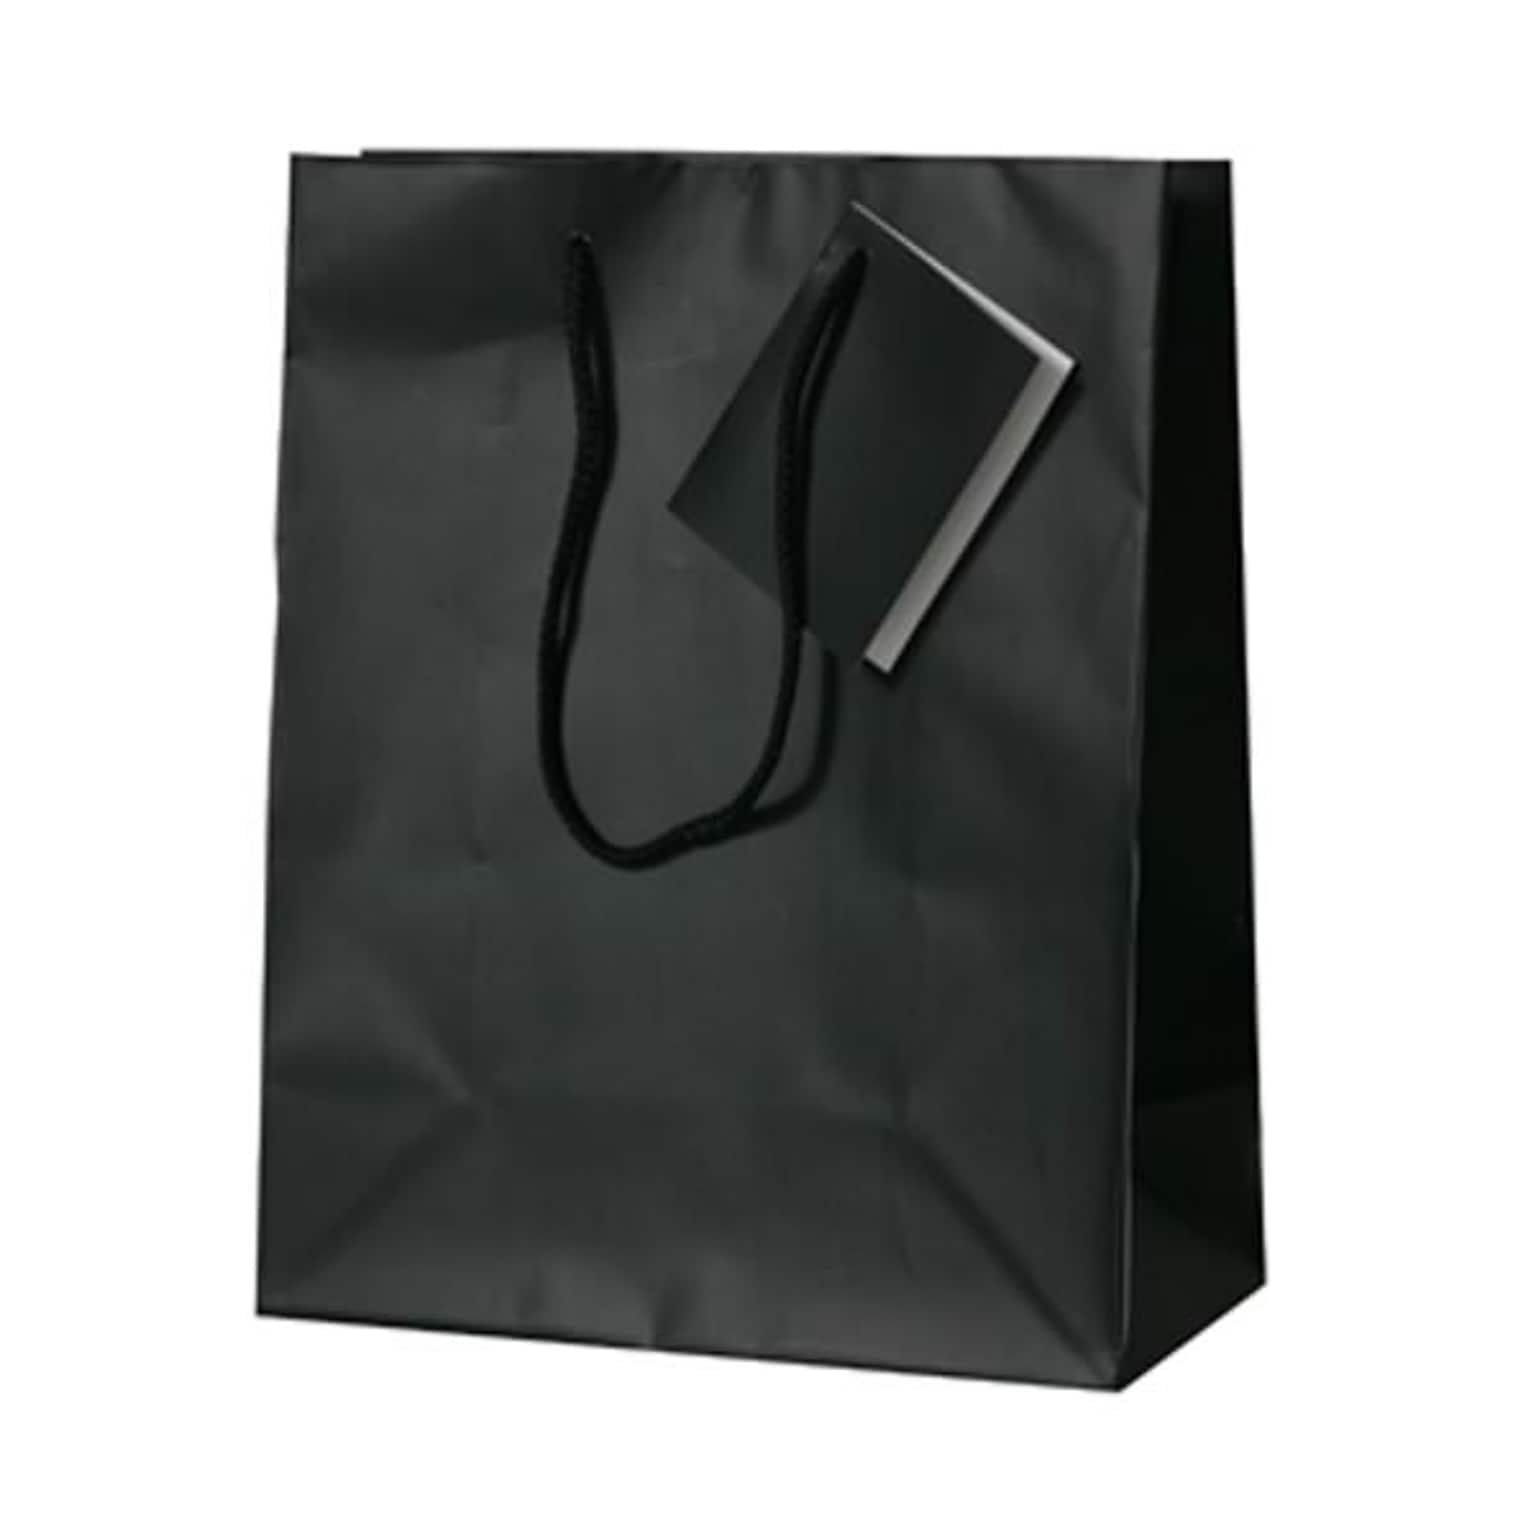 JAM PAPER Gift Bags with Rope Handles, Medium, 8 x 10 x 4, Black Matte, 3/Pack (672MABLA)